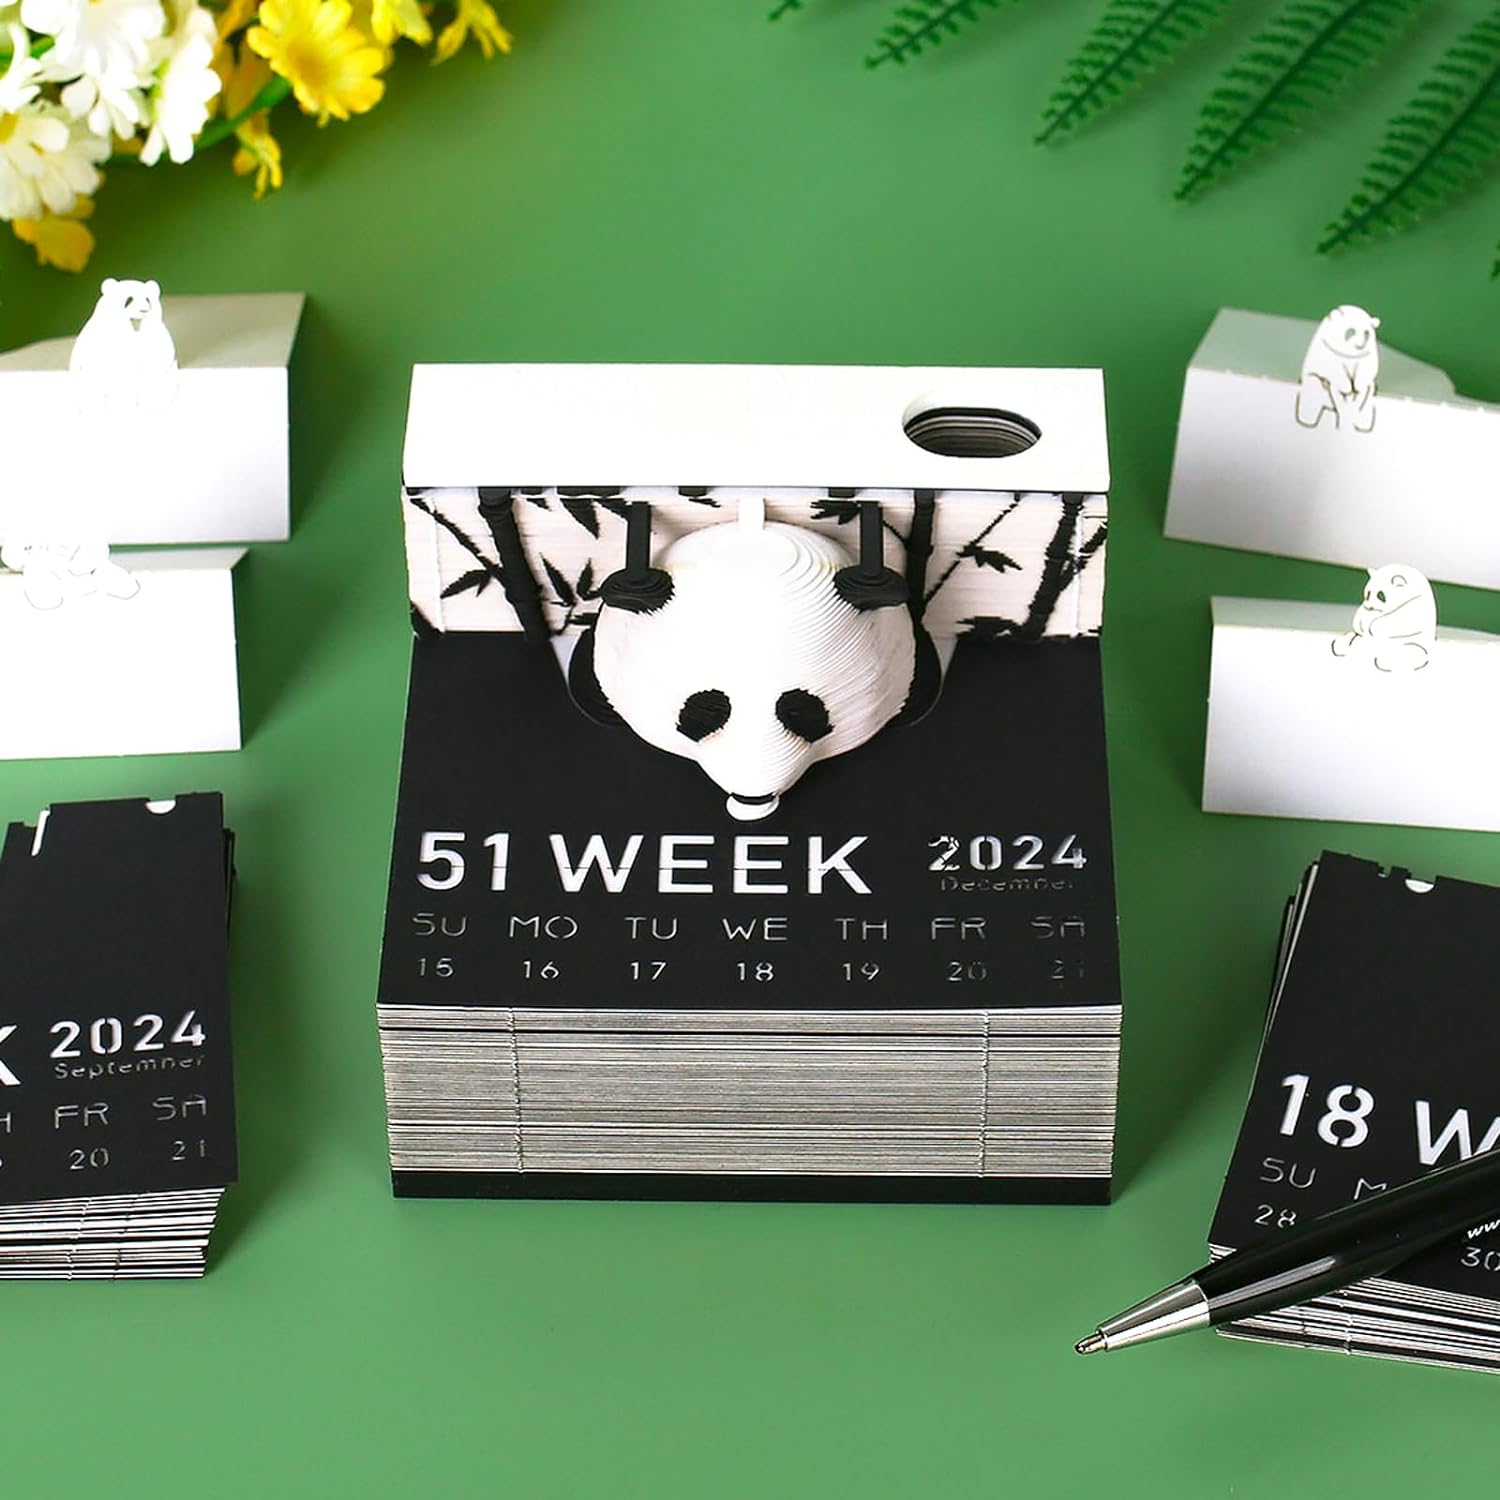 2024 Time Piece Panda 3D Calendar Memo Pad with Pen Holder